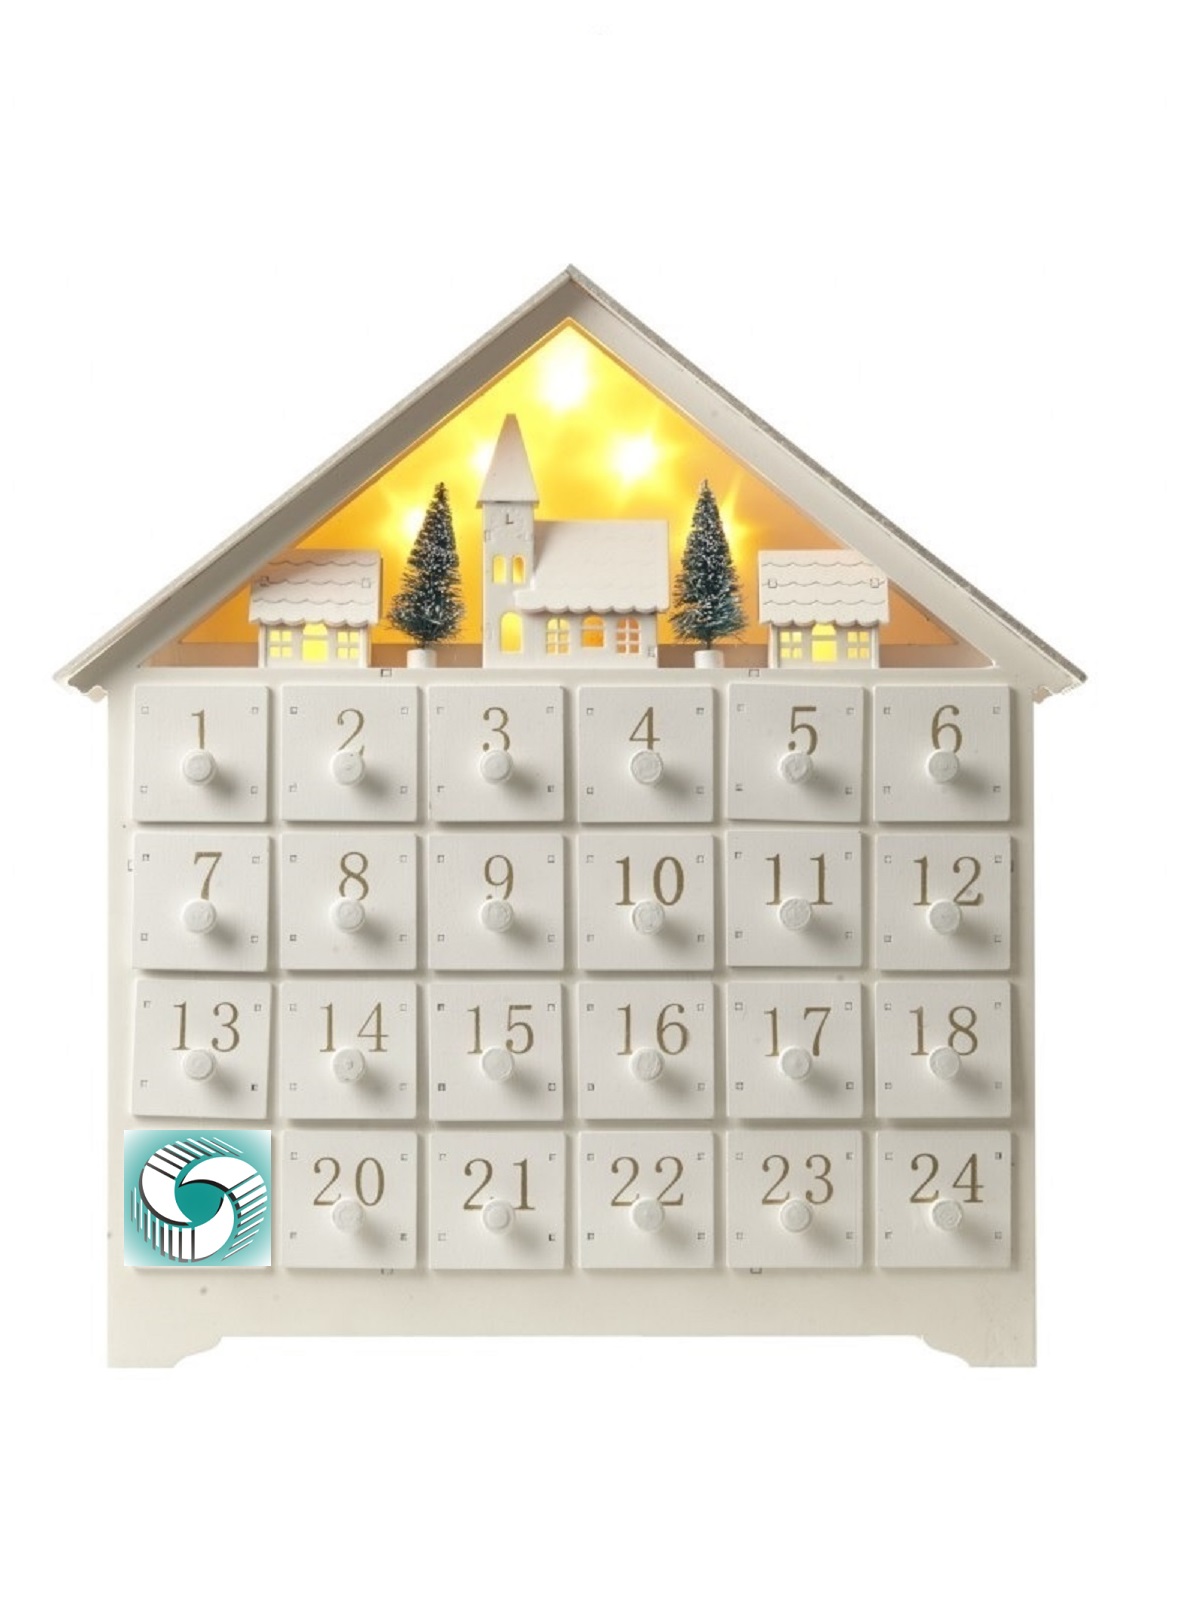 Day 19 – Frontier’s Advent Calendar